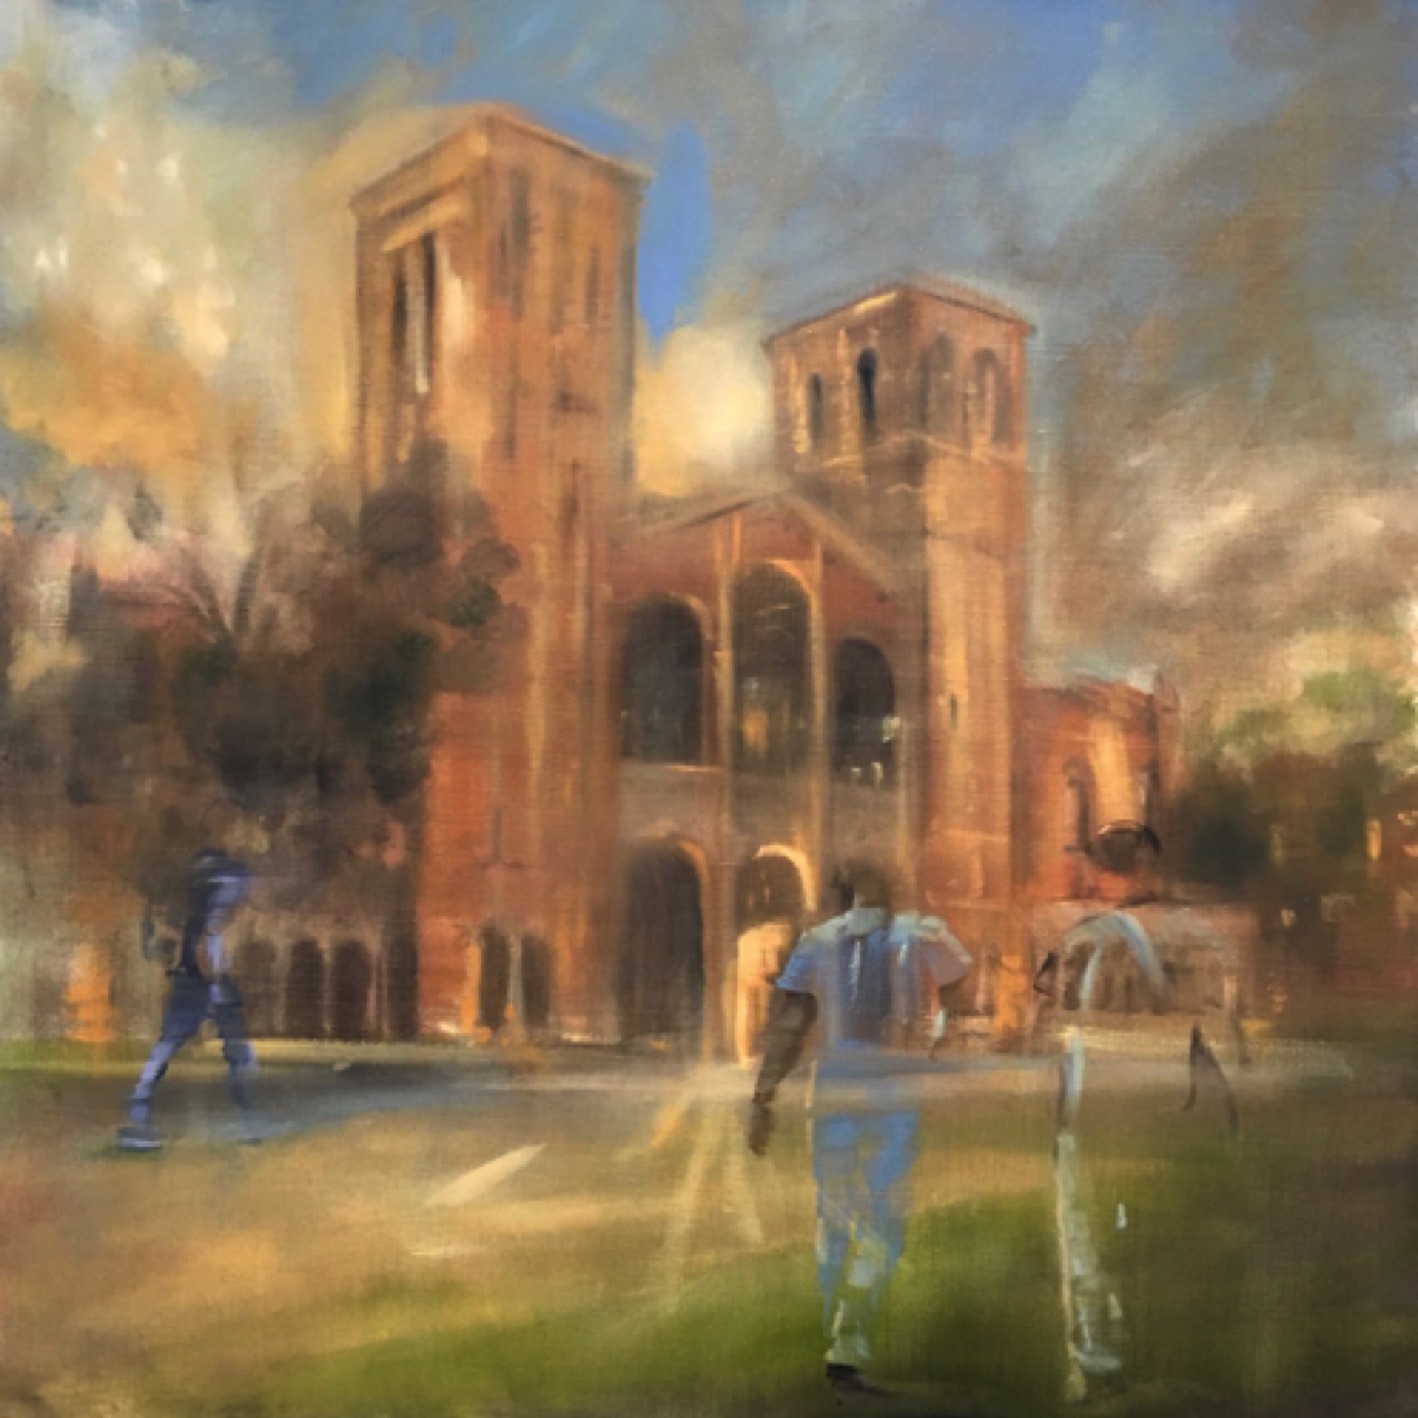 Gregg Chadwick
Royce Hall - Where It All Began
36”x36” oil on linen 2019
UCLA School of Nursing Collection